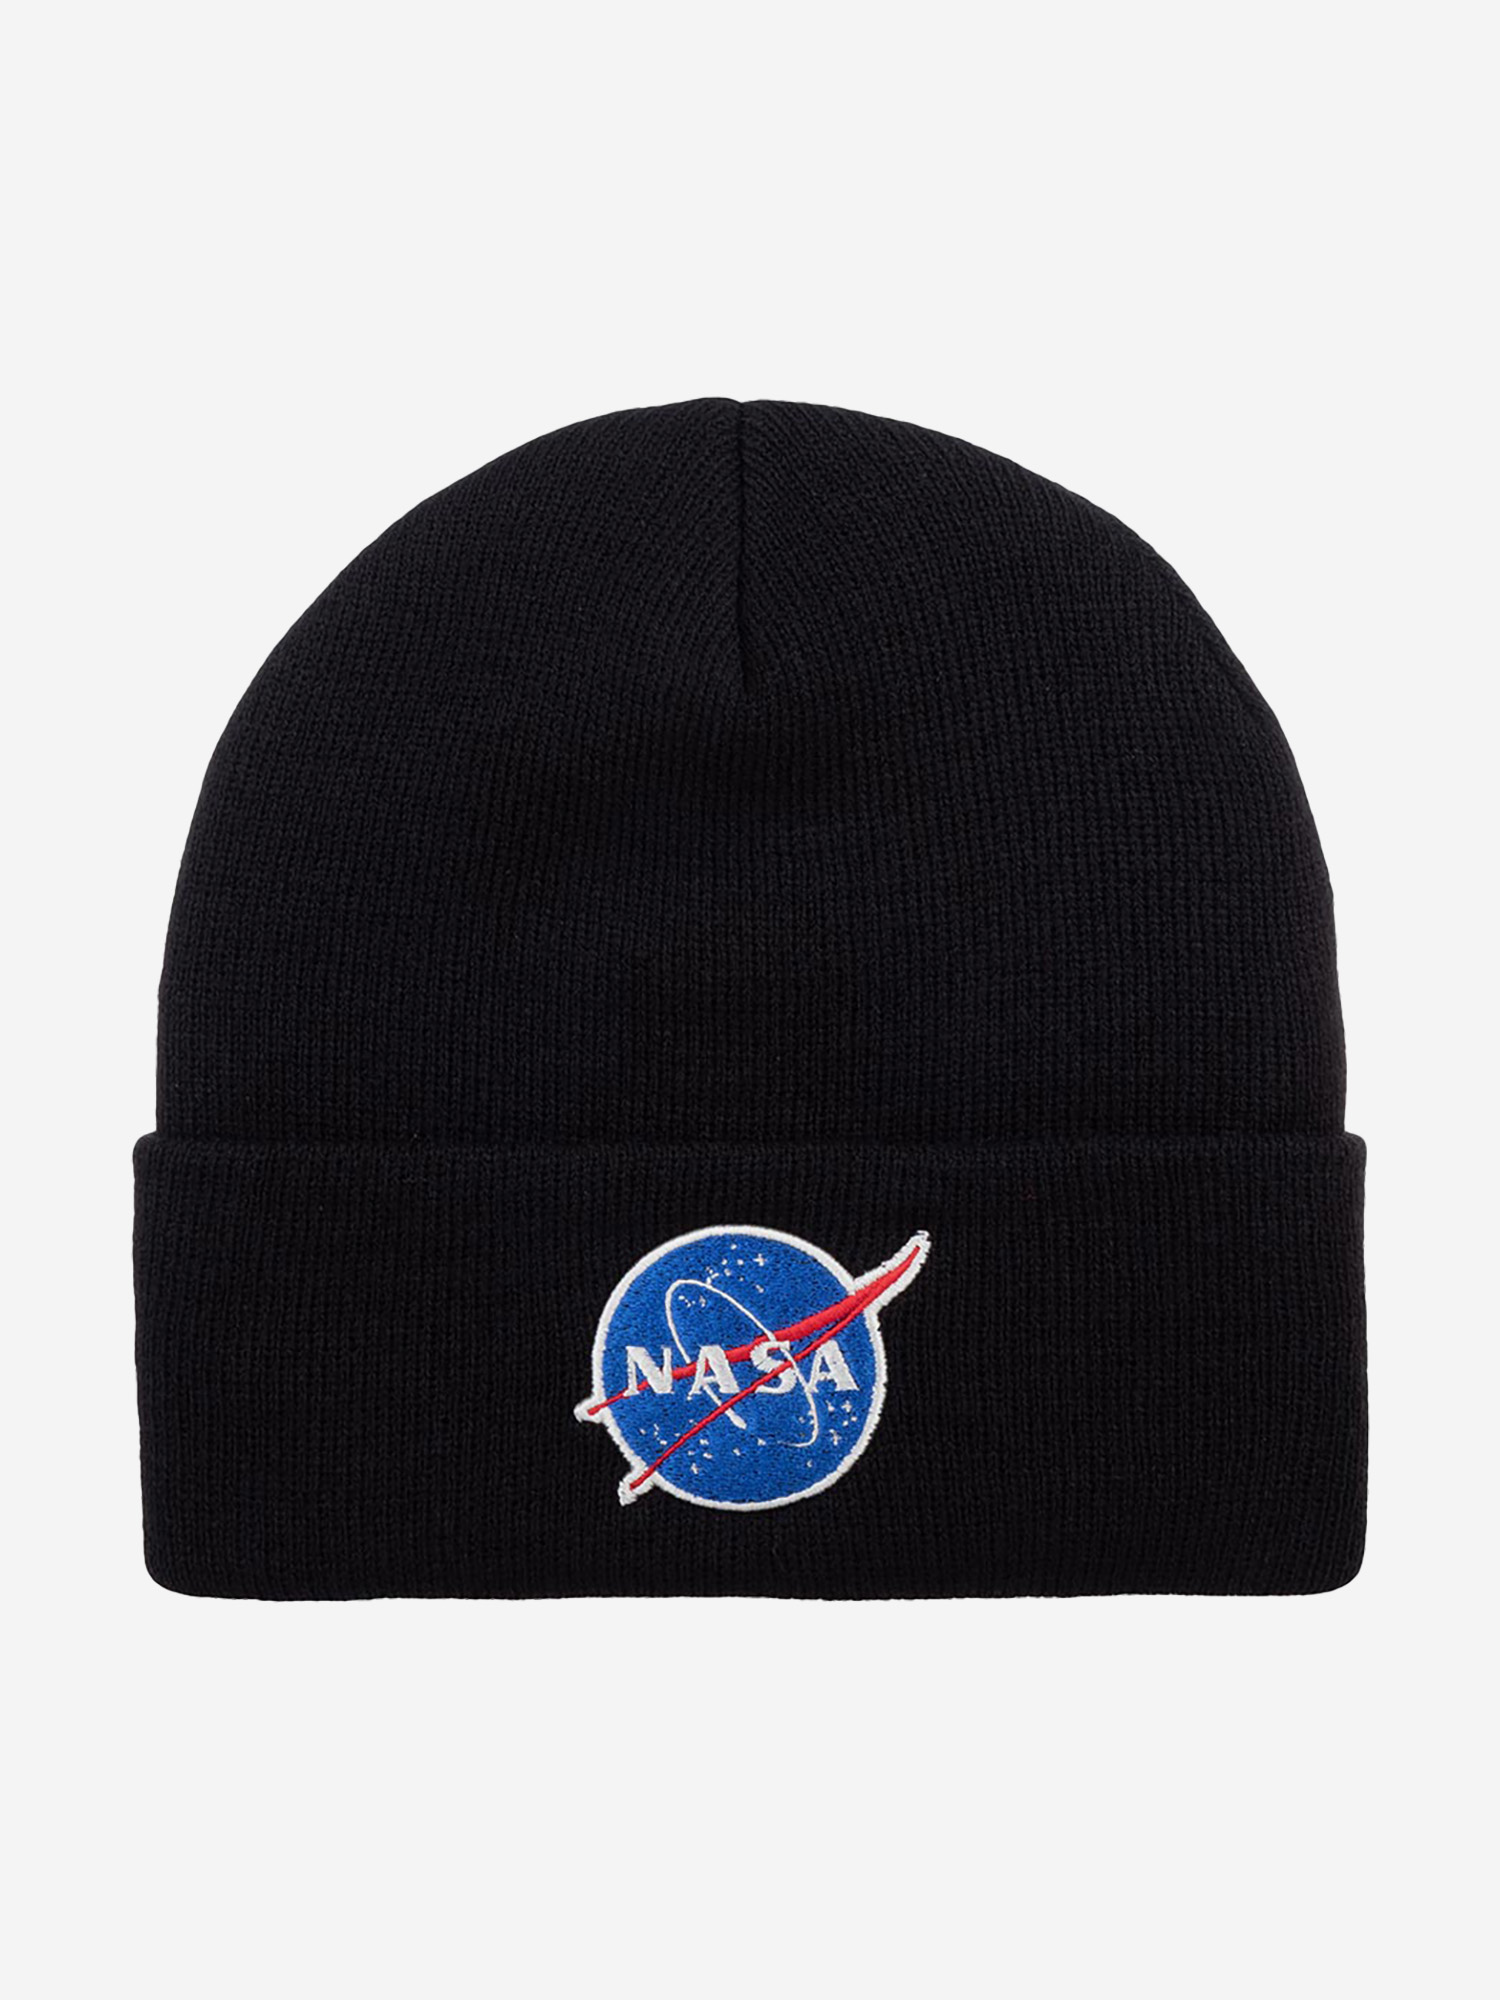 Шапка с отворотом AMERICAN NEEDLE 21019A-NASA NASA Cuffed Knit (черный), Черный бейсболка american needle 43870a nasa space with nasa